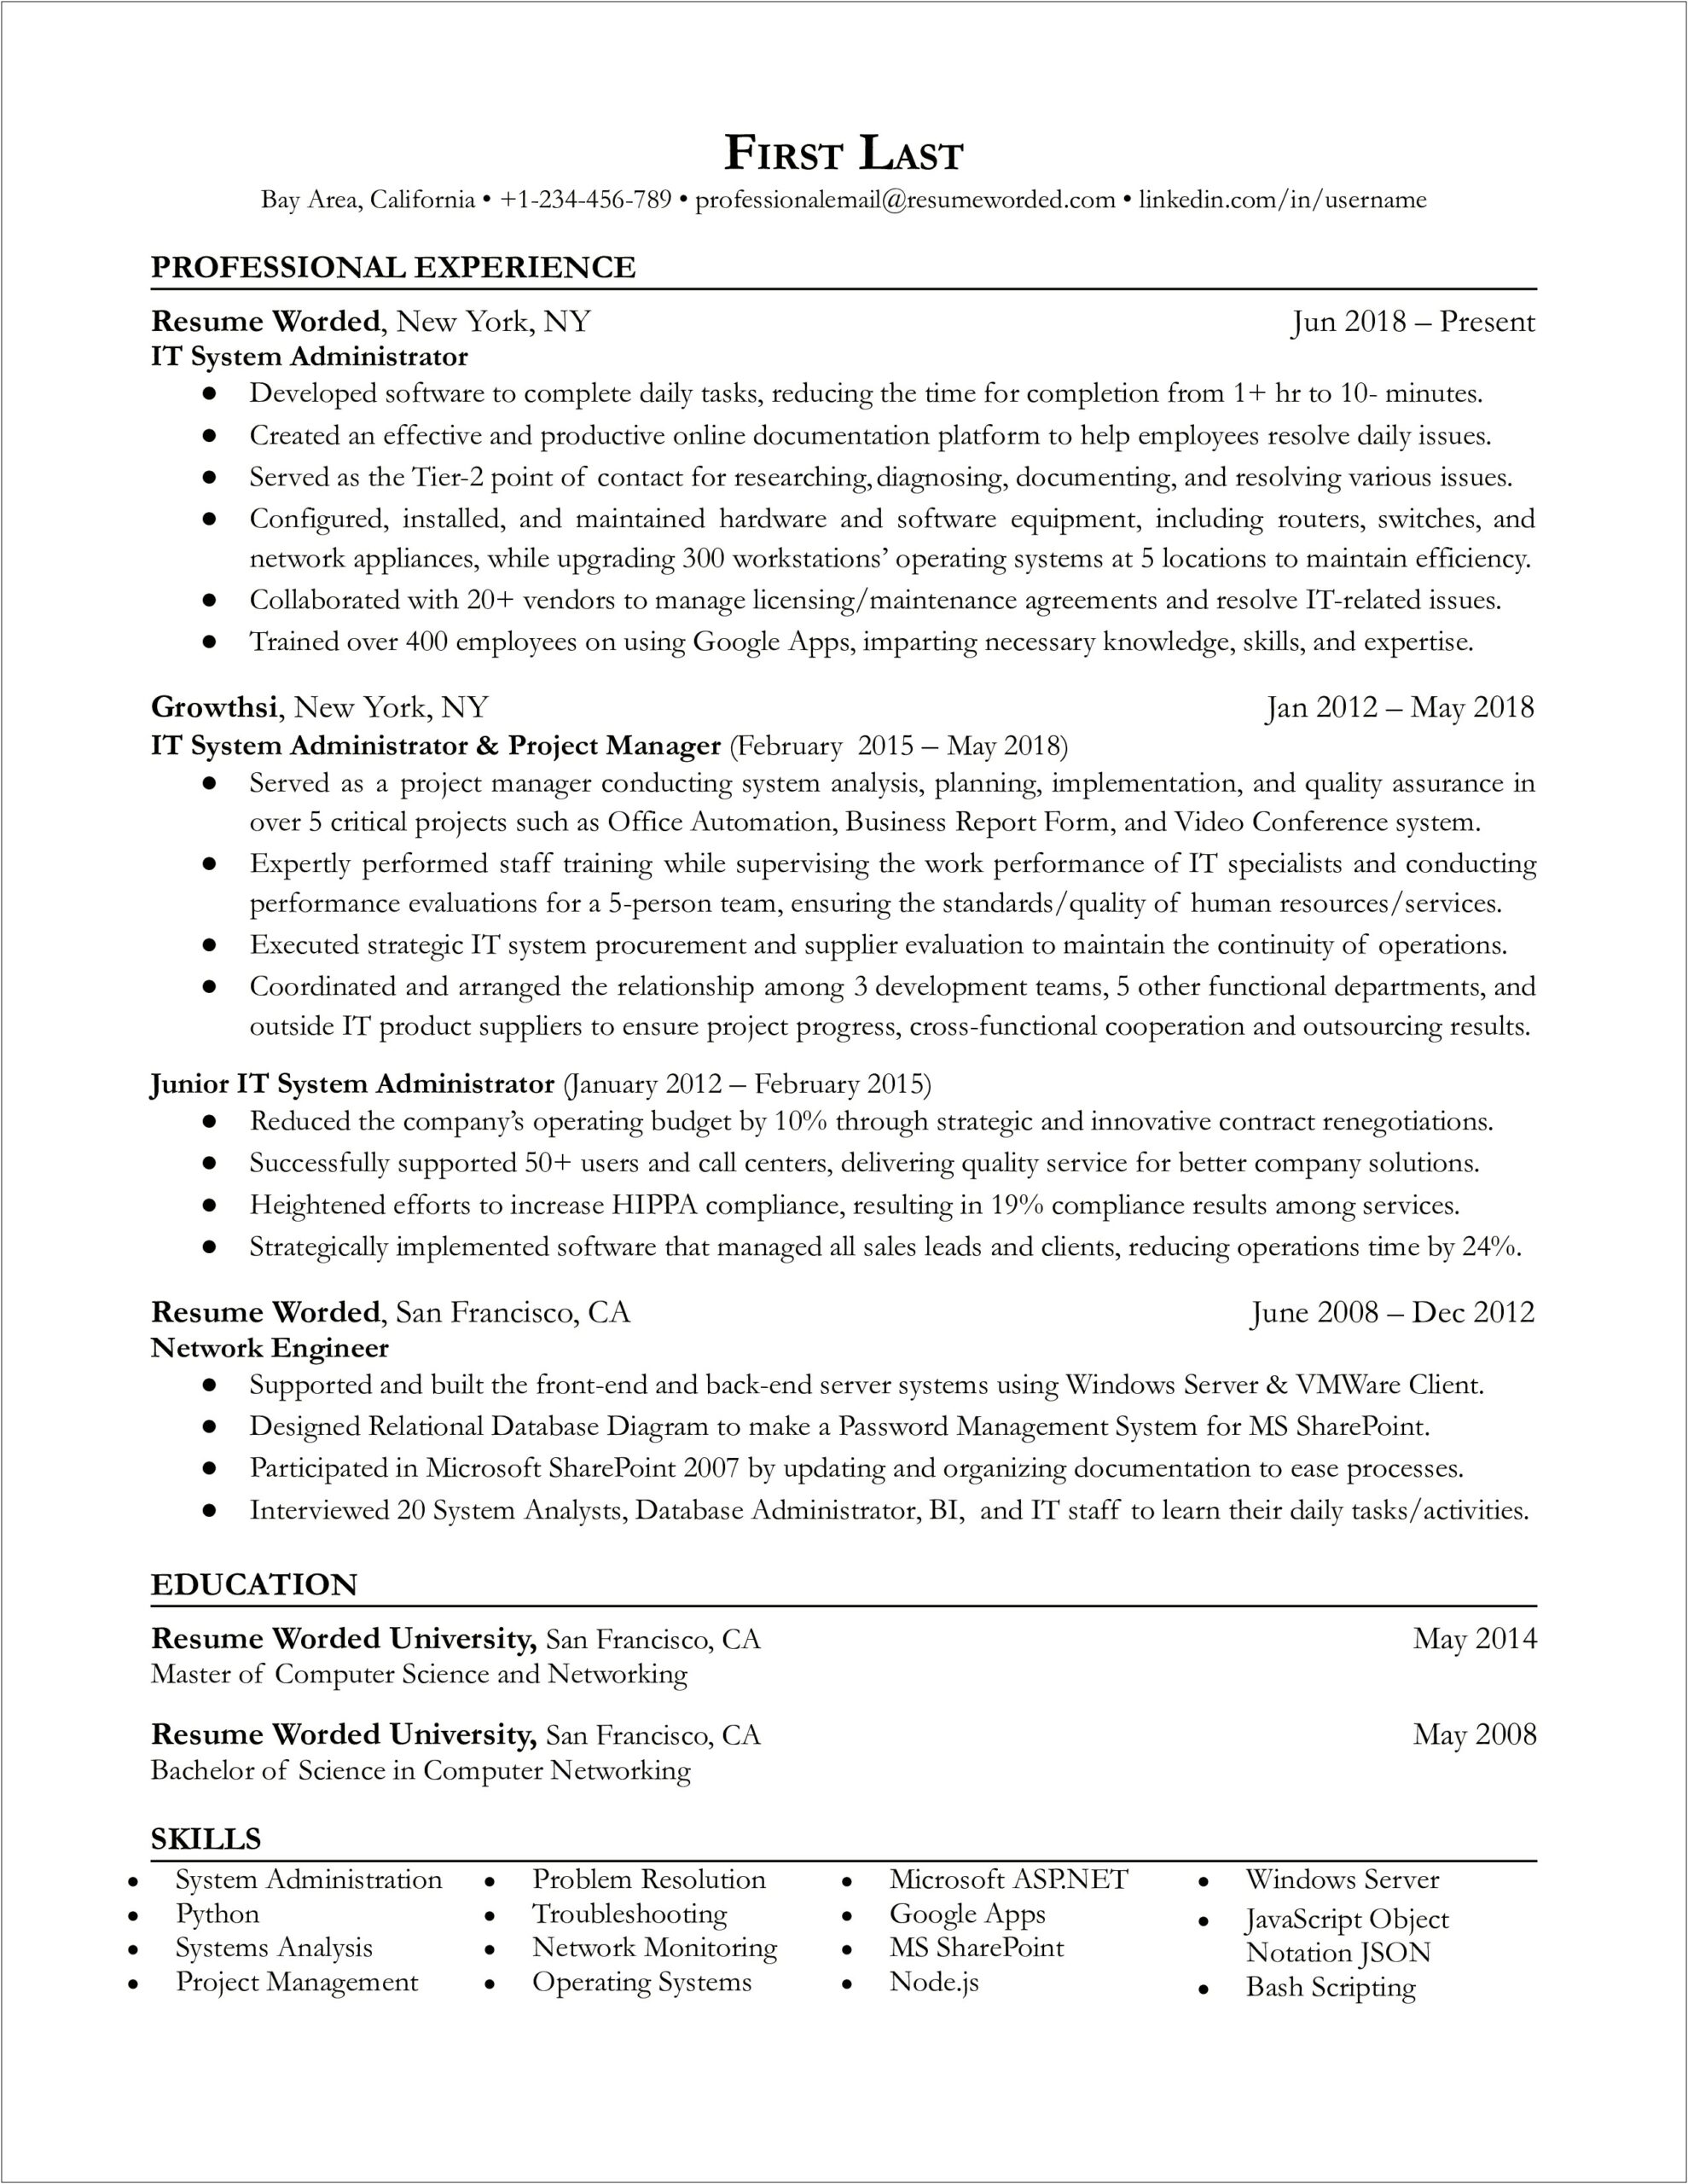 Network Administrator Job Experience Resume 2 Years